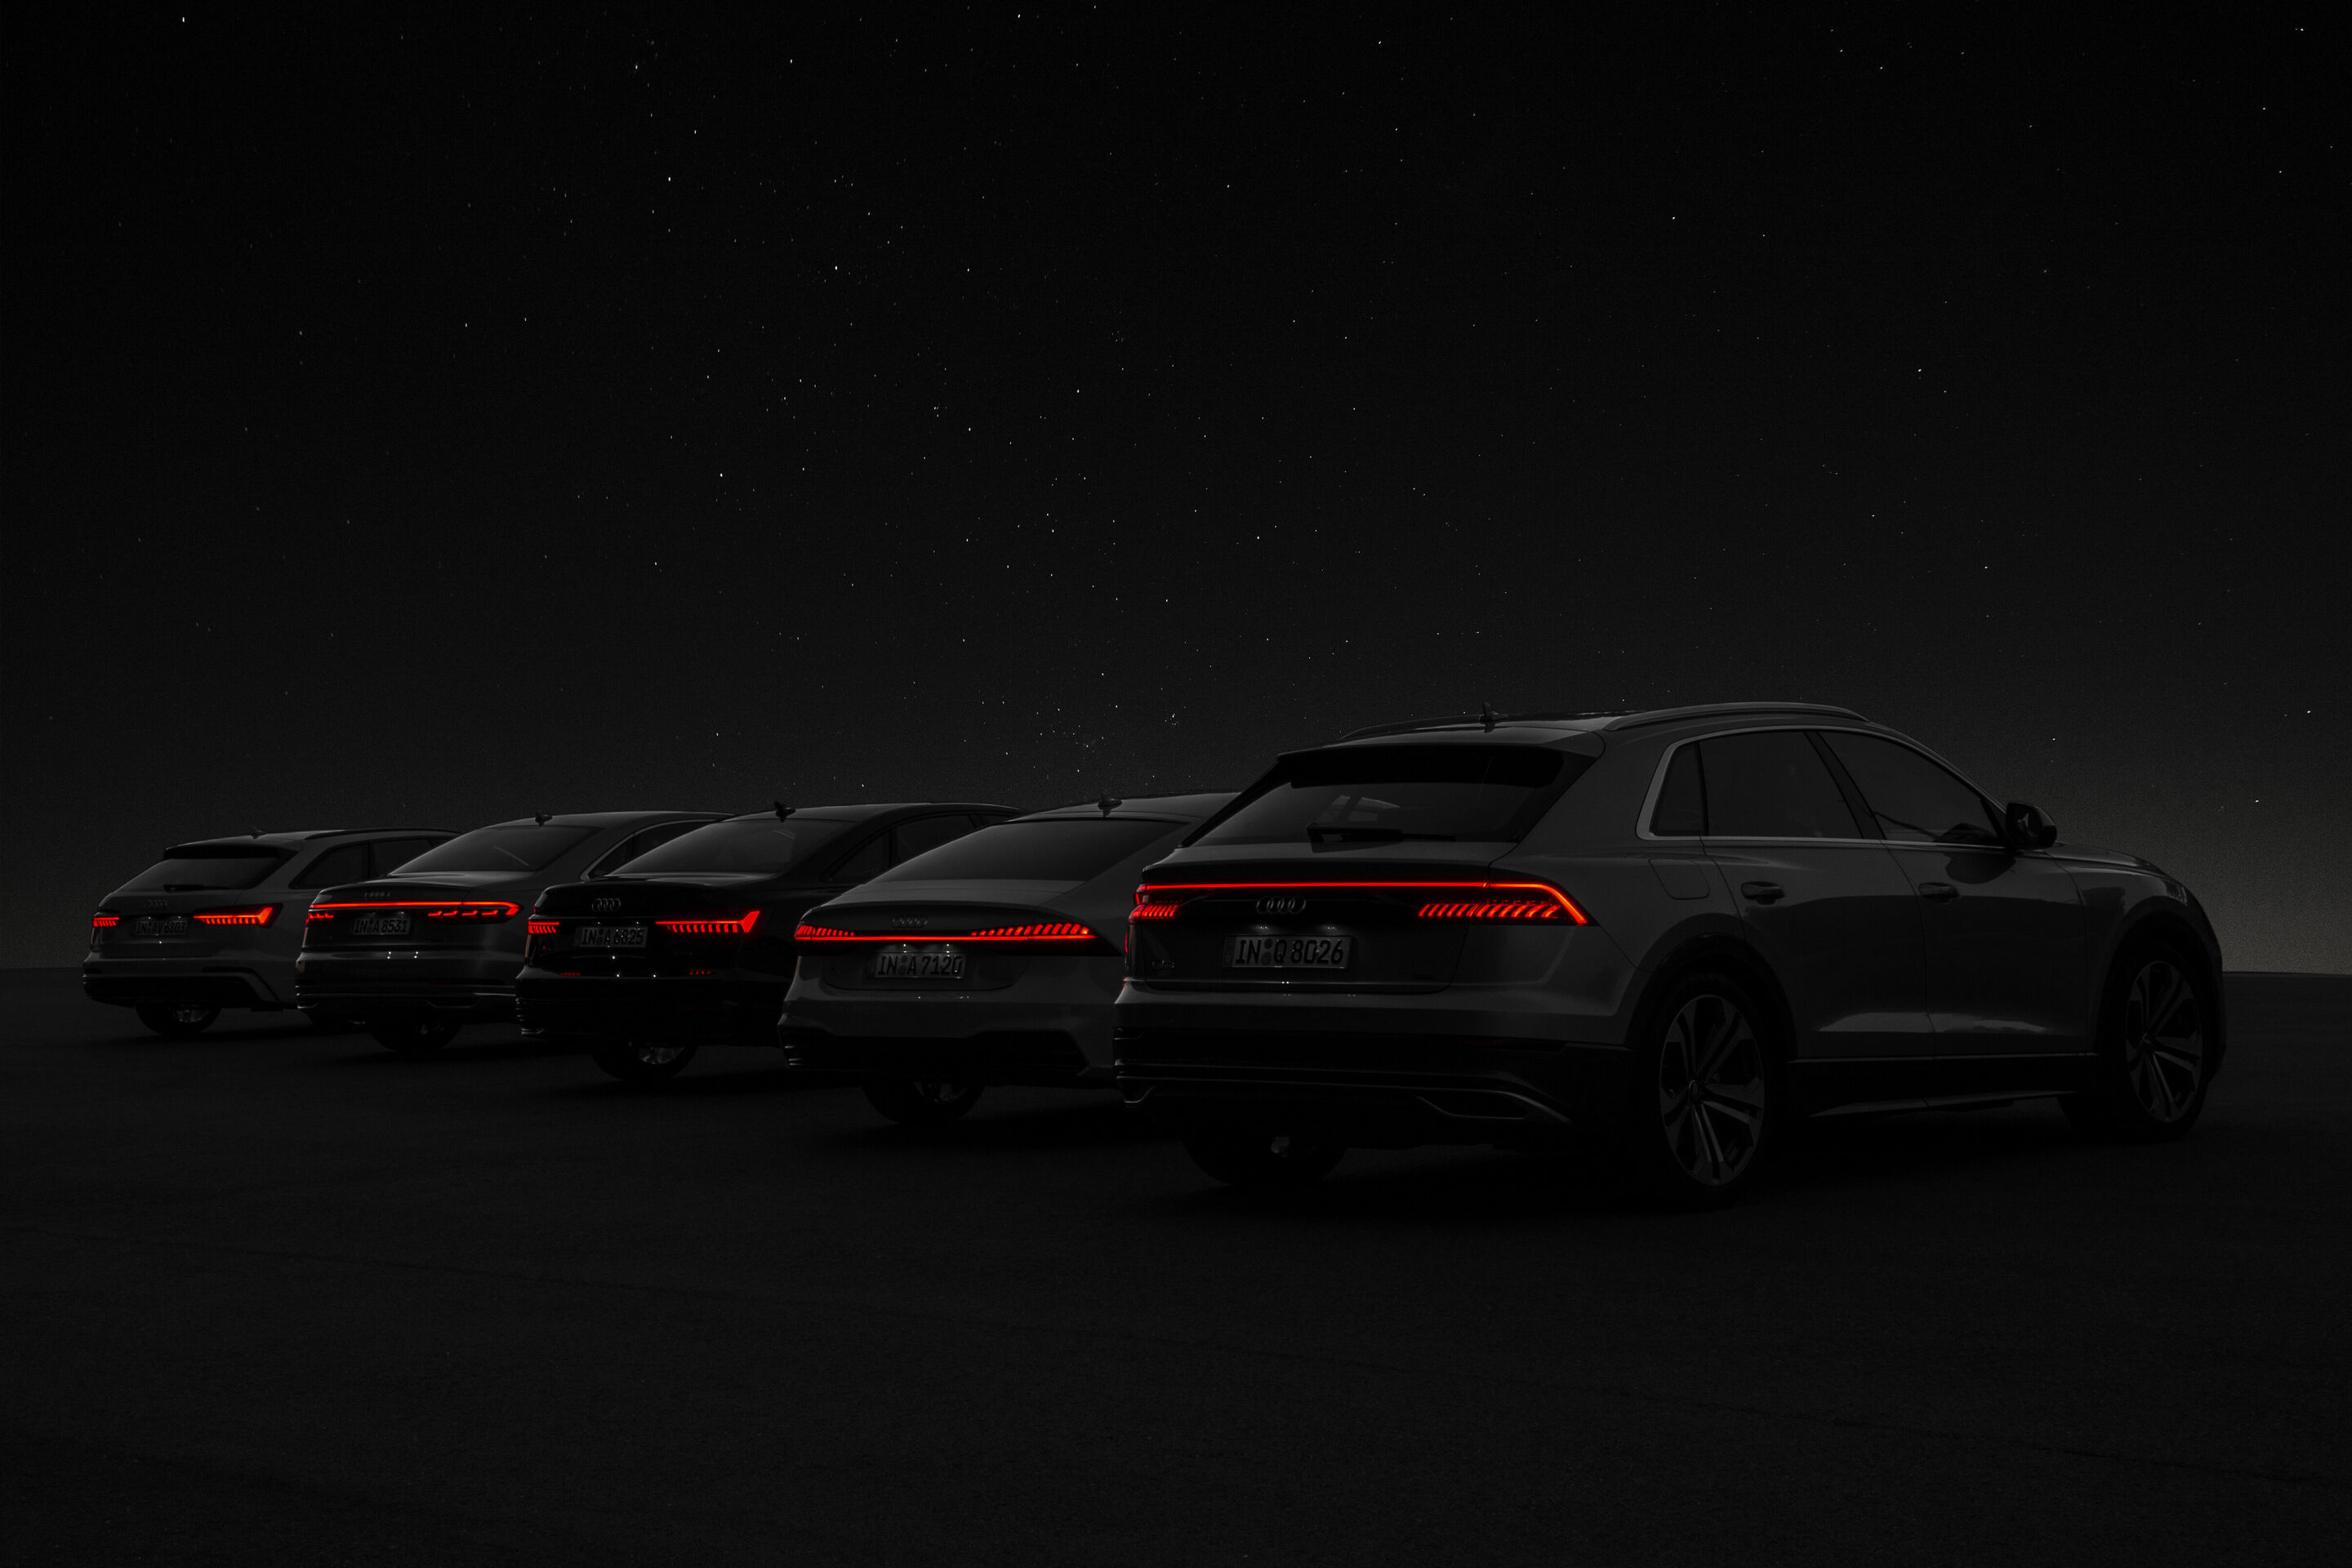 Audi’s new full-size class